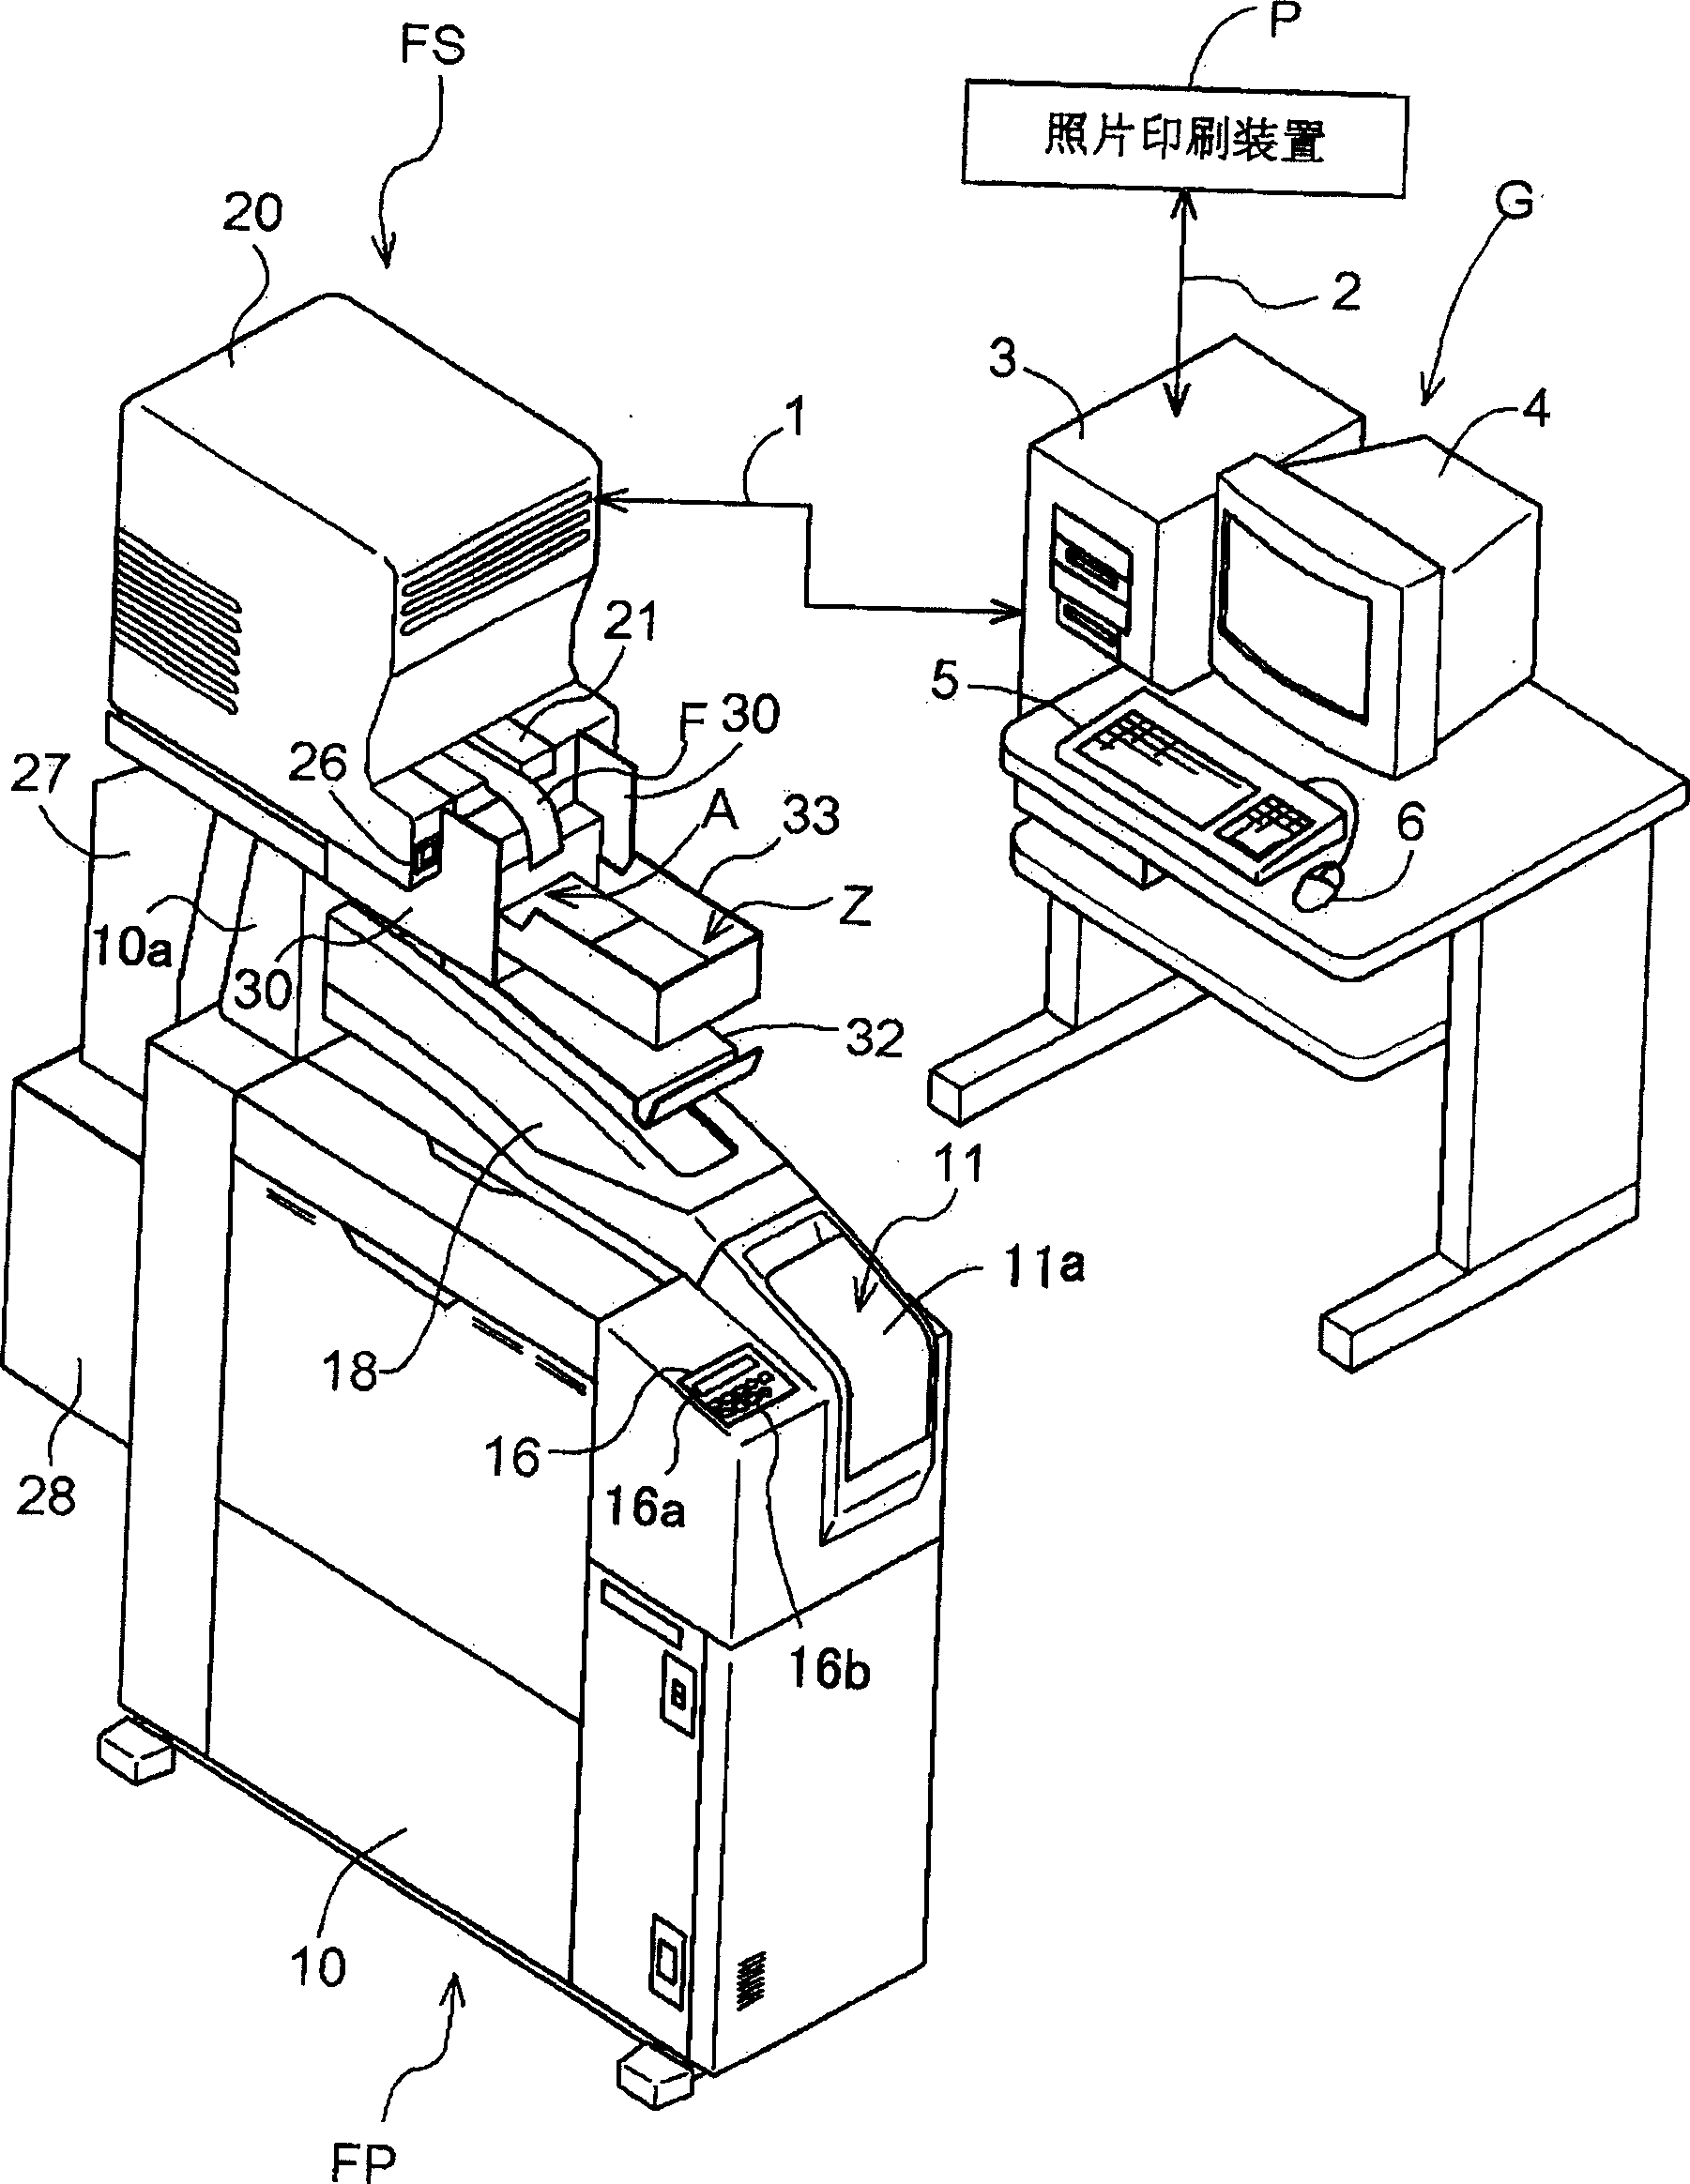 Film treatment device